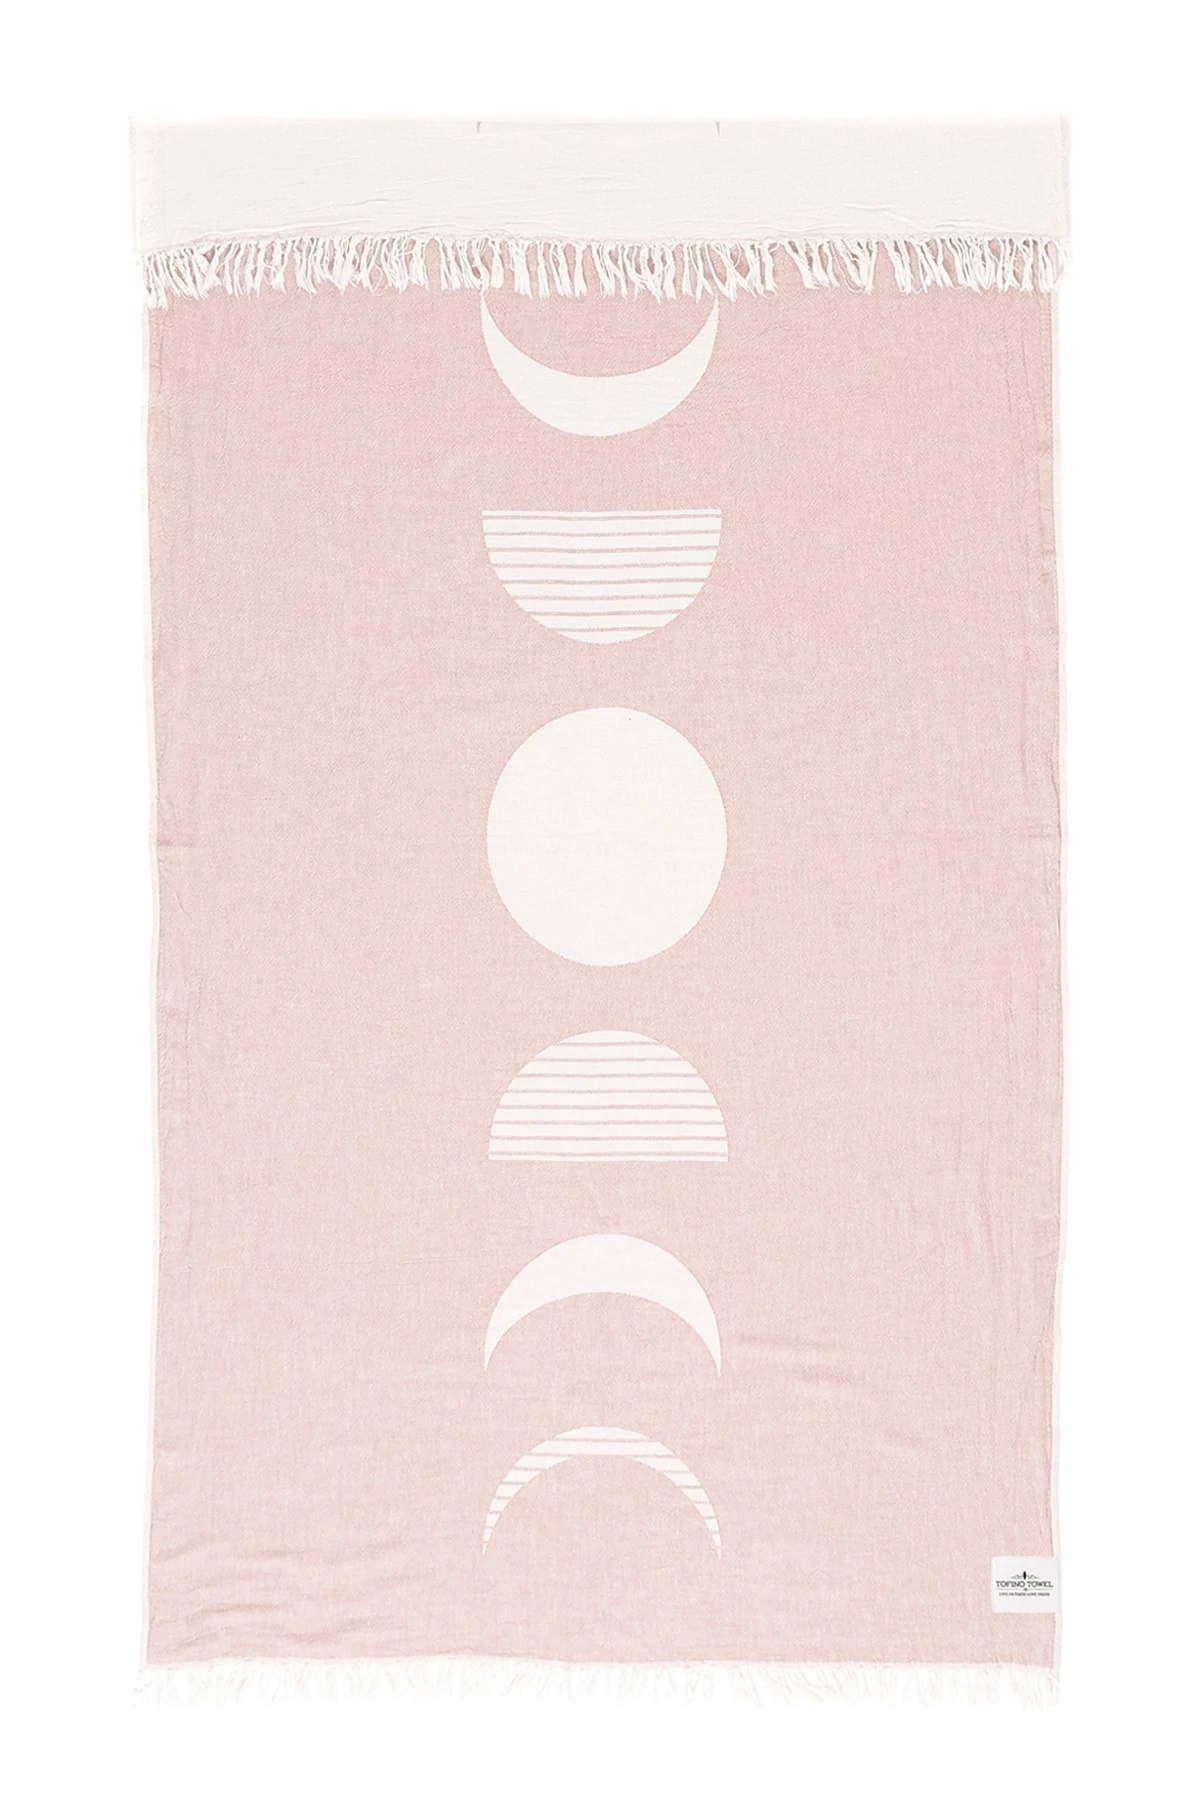 Tofino Towel Co Tofino Towel -The Moonphase Towel